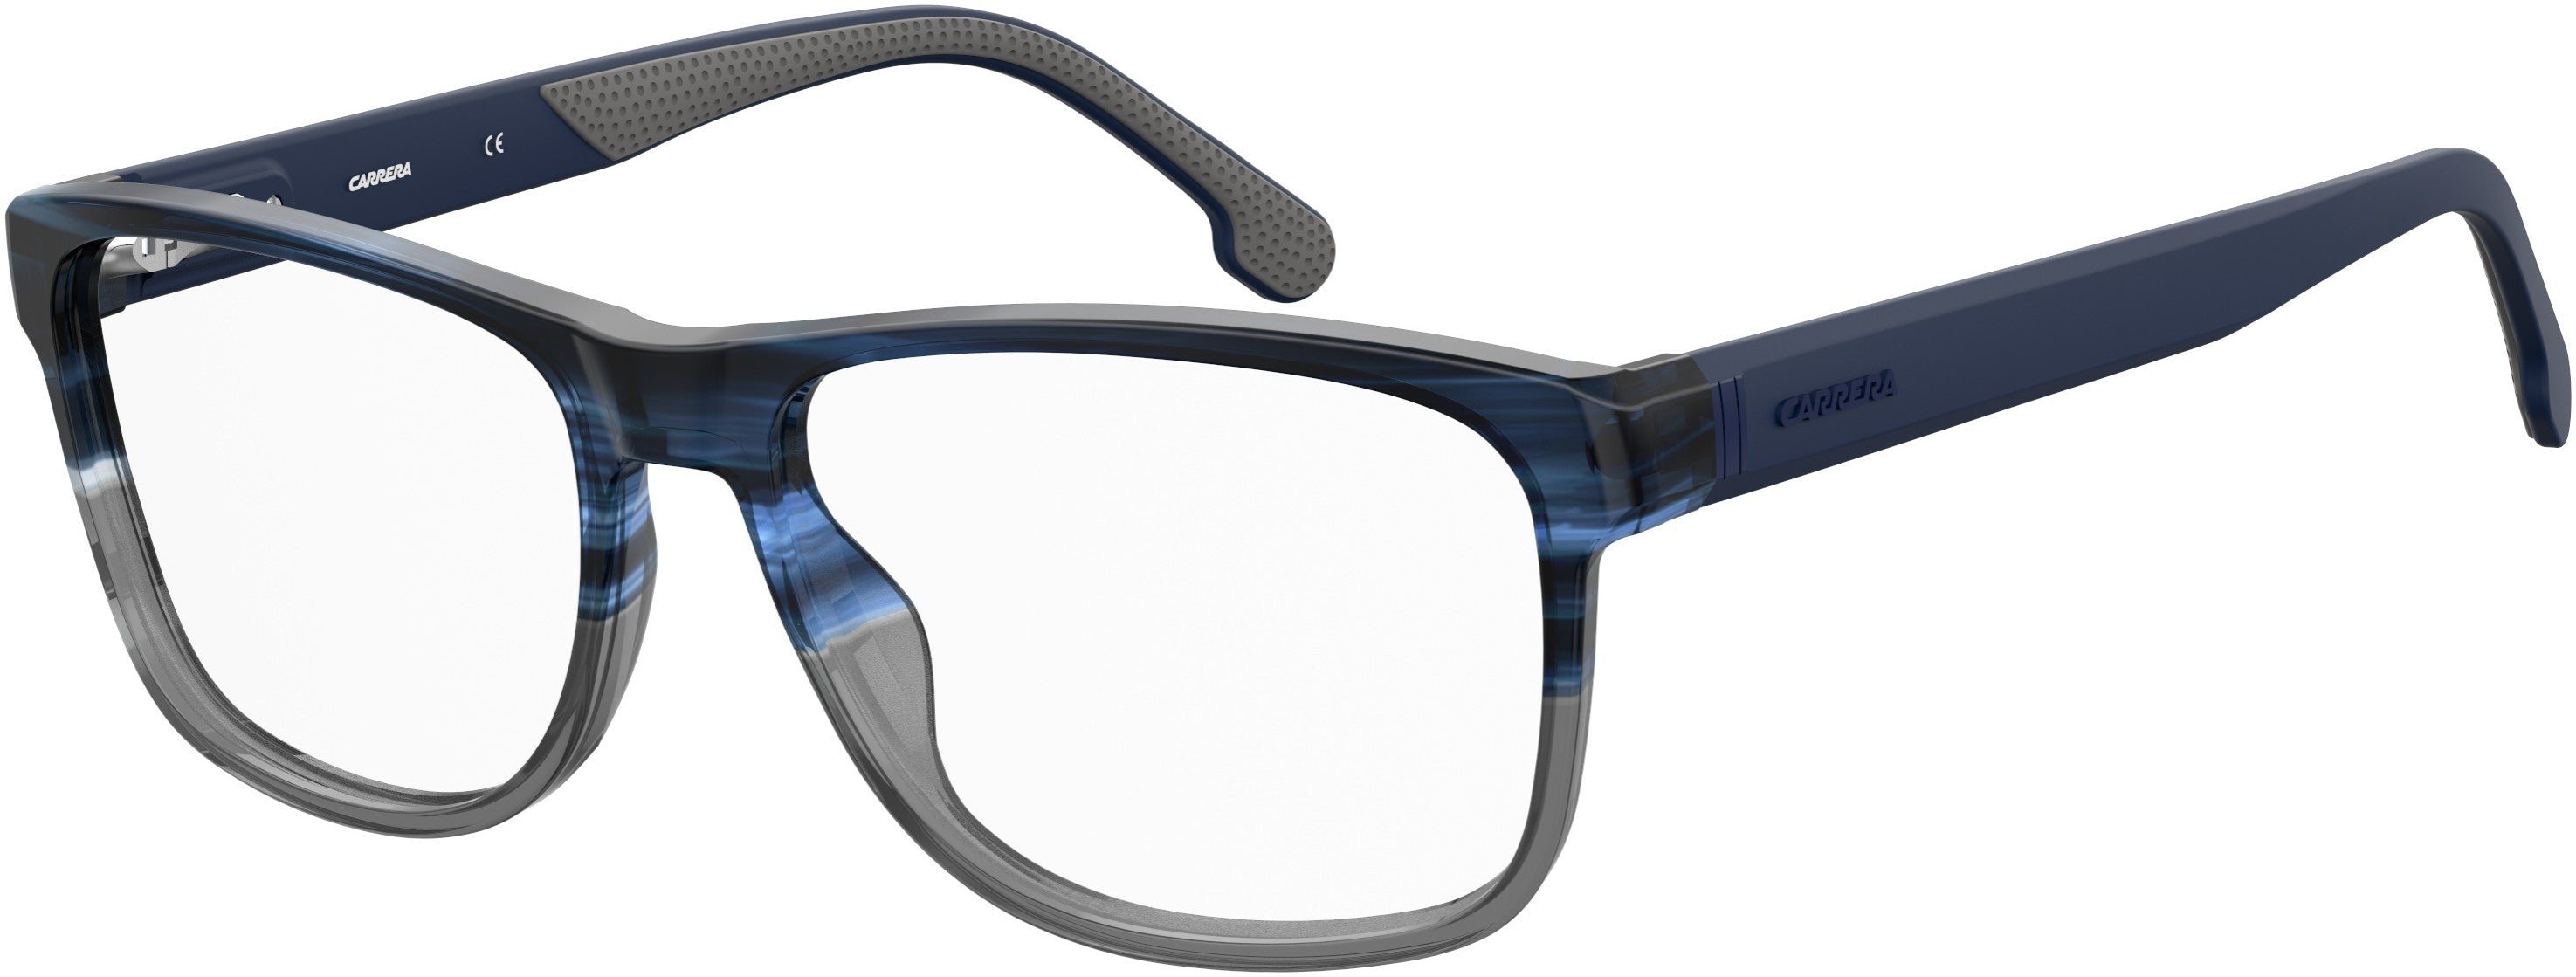  Carrera 8851 Rectangular Eyeglasses 03HH-03HH  Blue Gray Black (00 Demo Lens)